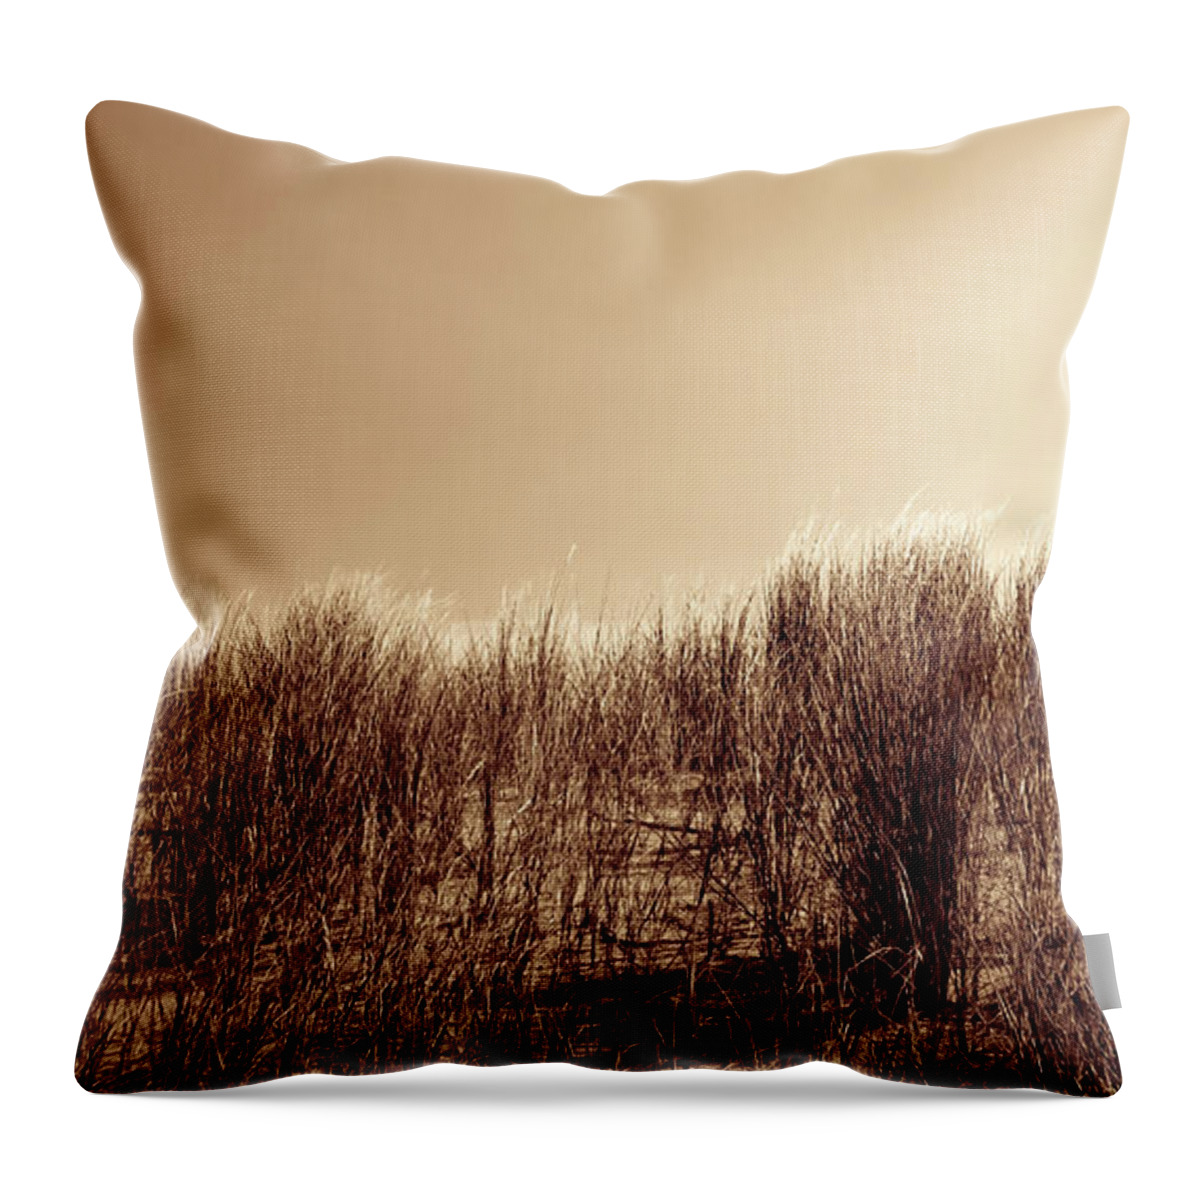 Beachgrass Throw Pillow featuring the photograph Beachgrass in Sepia by Wim Lanclus